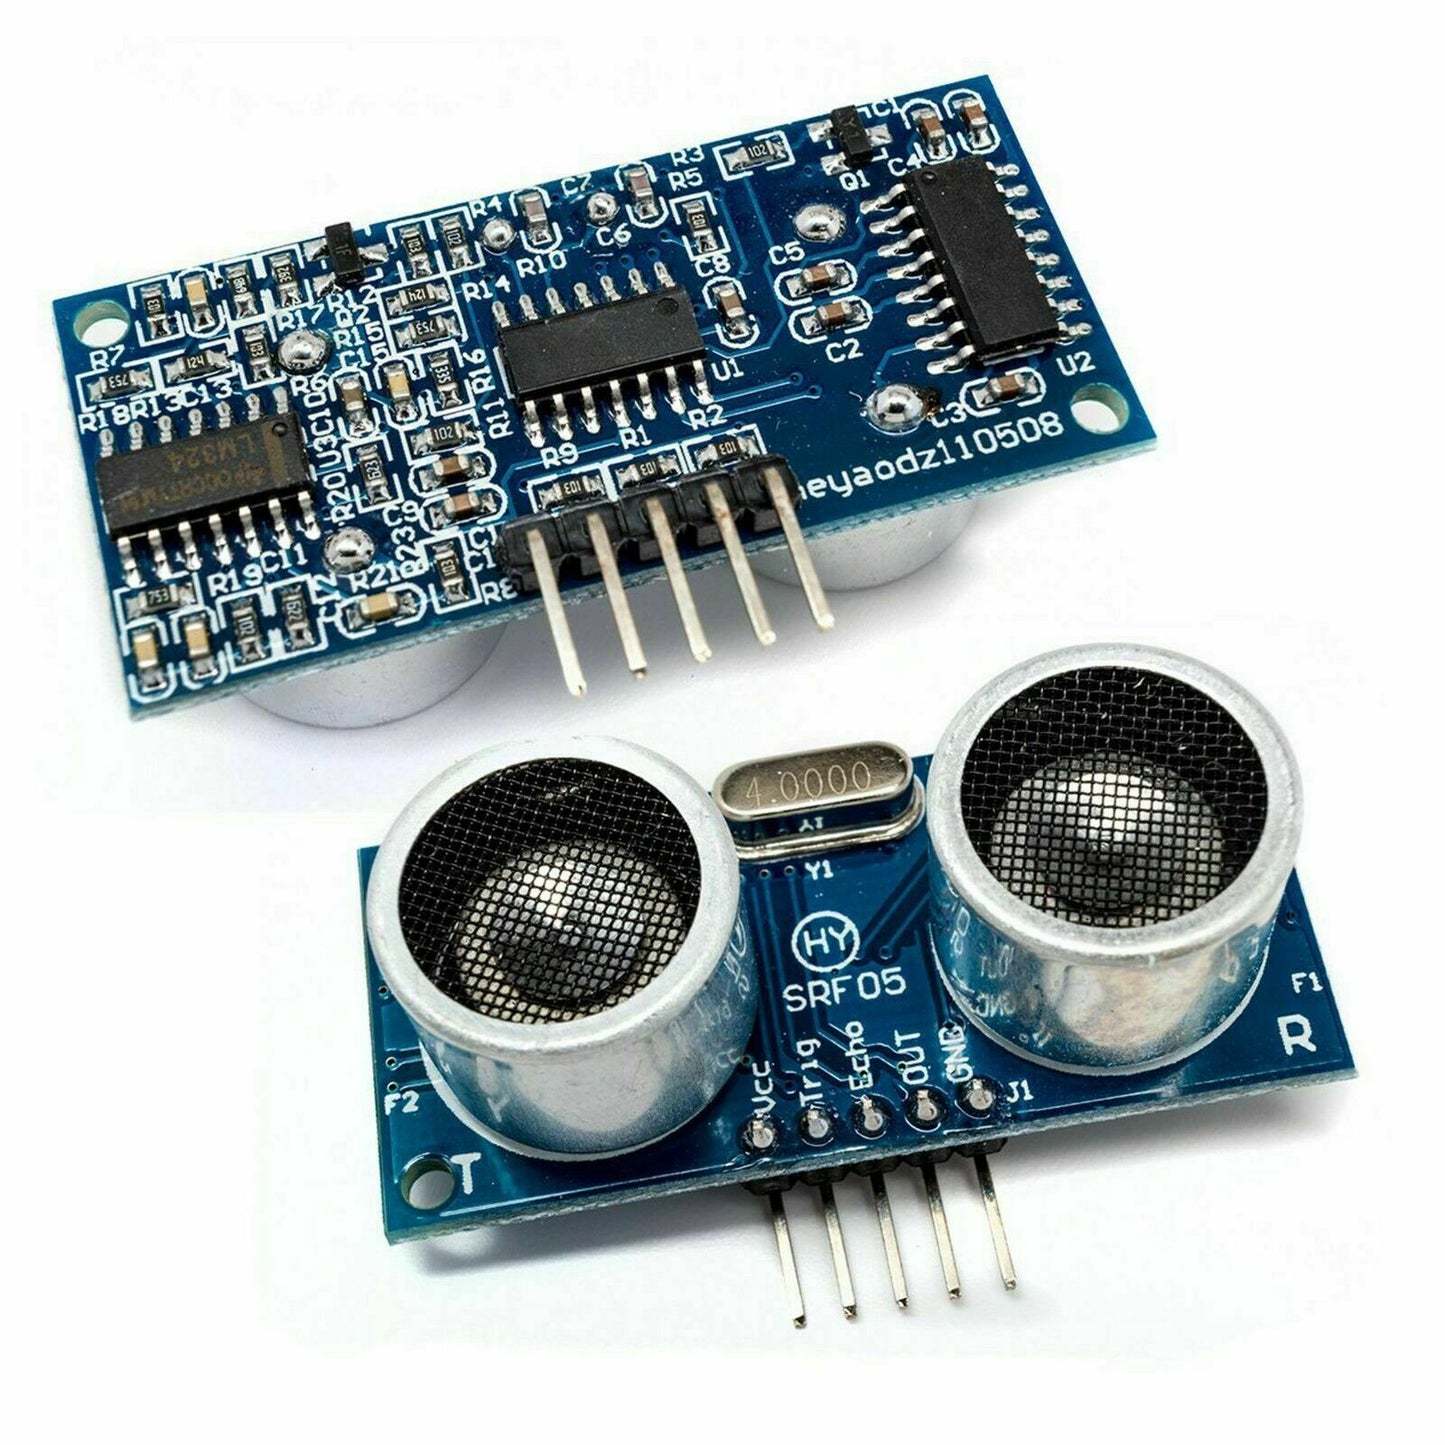 **3 or 5 Units** HY-SRF05 Precision Ultrasonic Range Sensor Module for Arduino